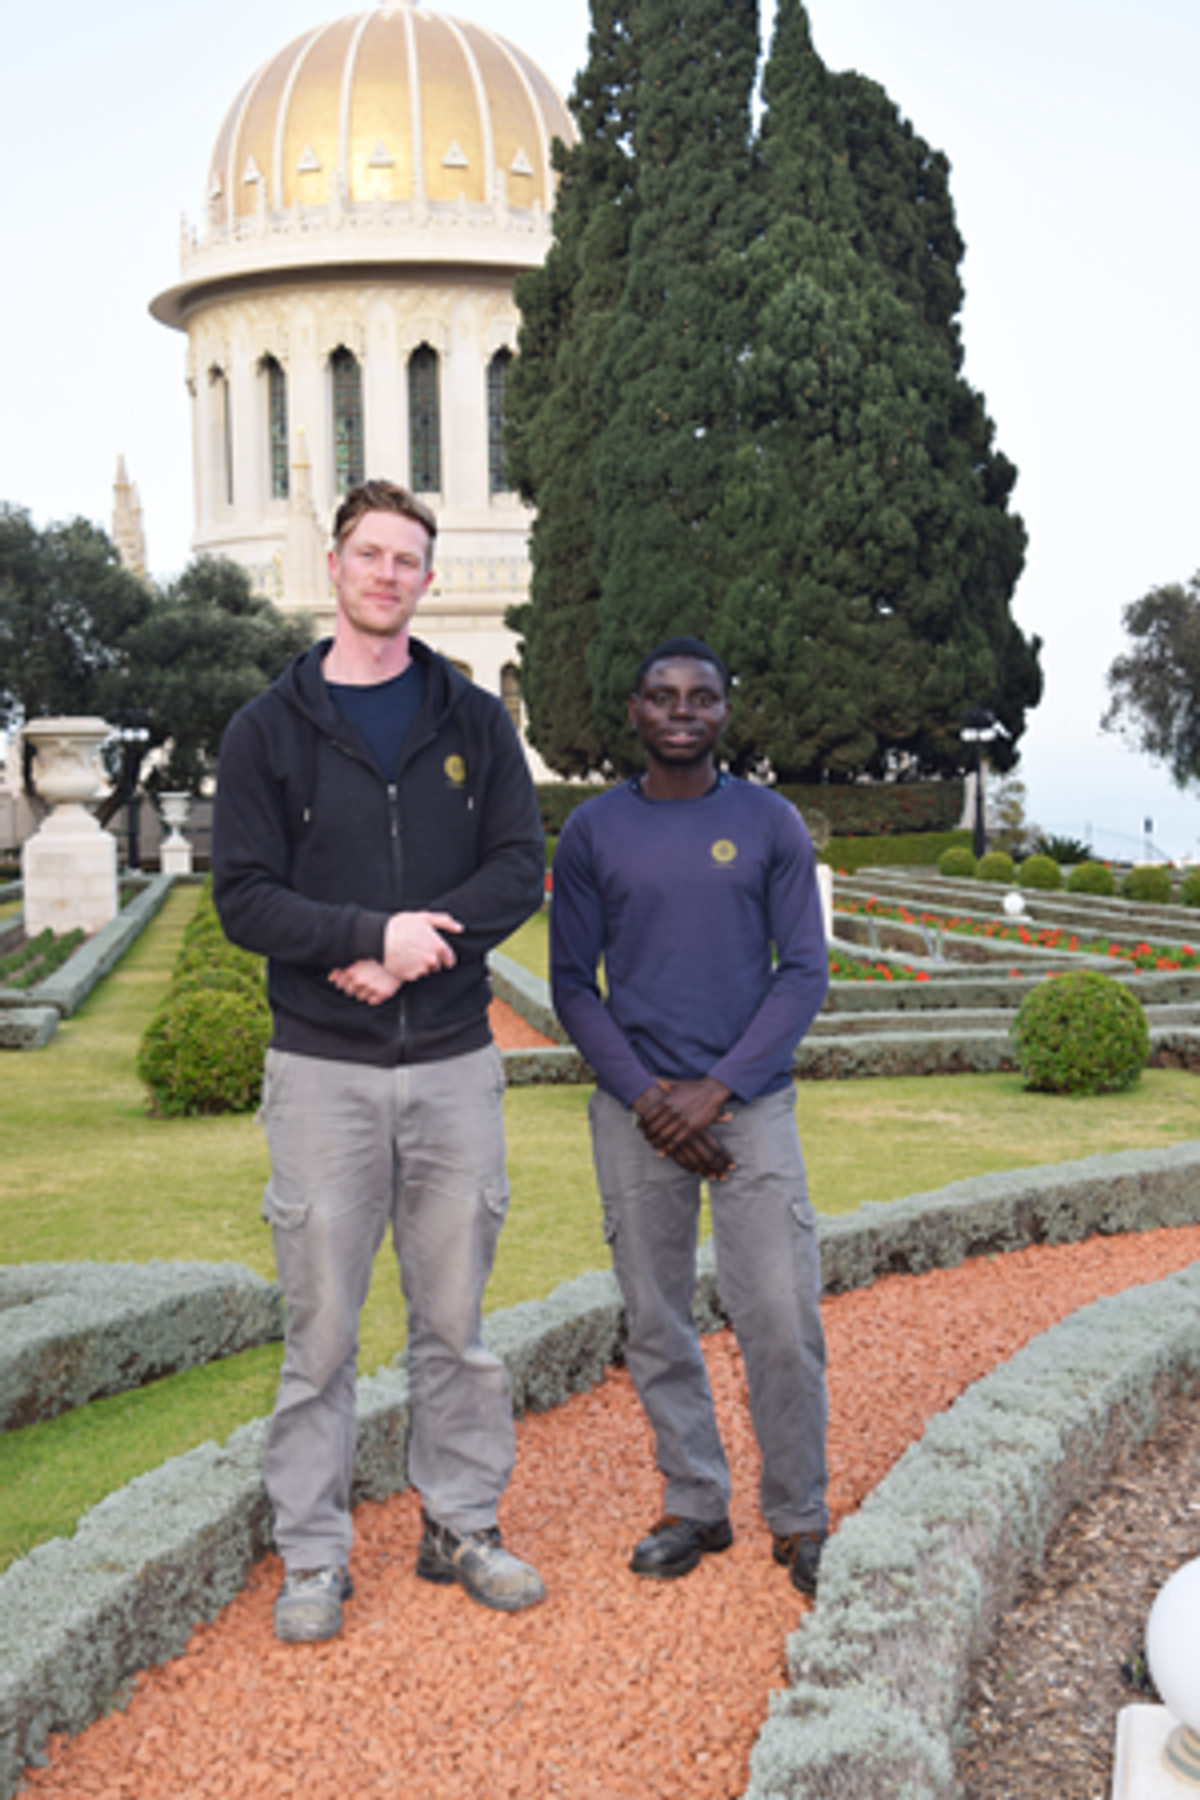 Intalik Milne, from Greenland, and Sydney Kopokosu, from Zambia, volunteer in the gardens. (Photo: Sara Toth Stub)